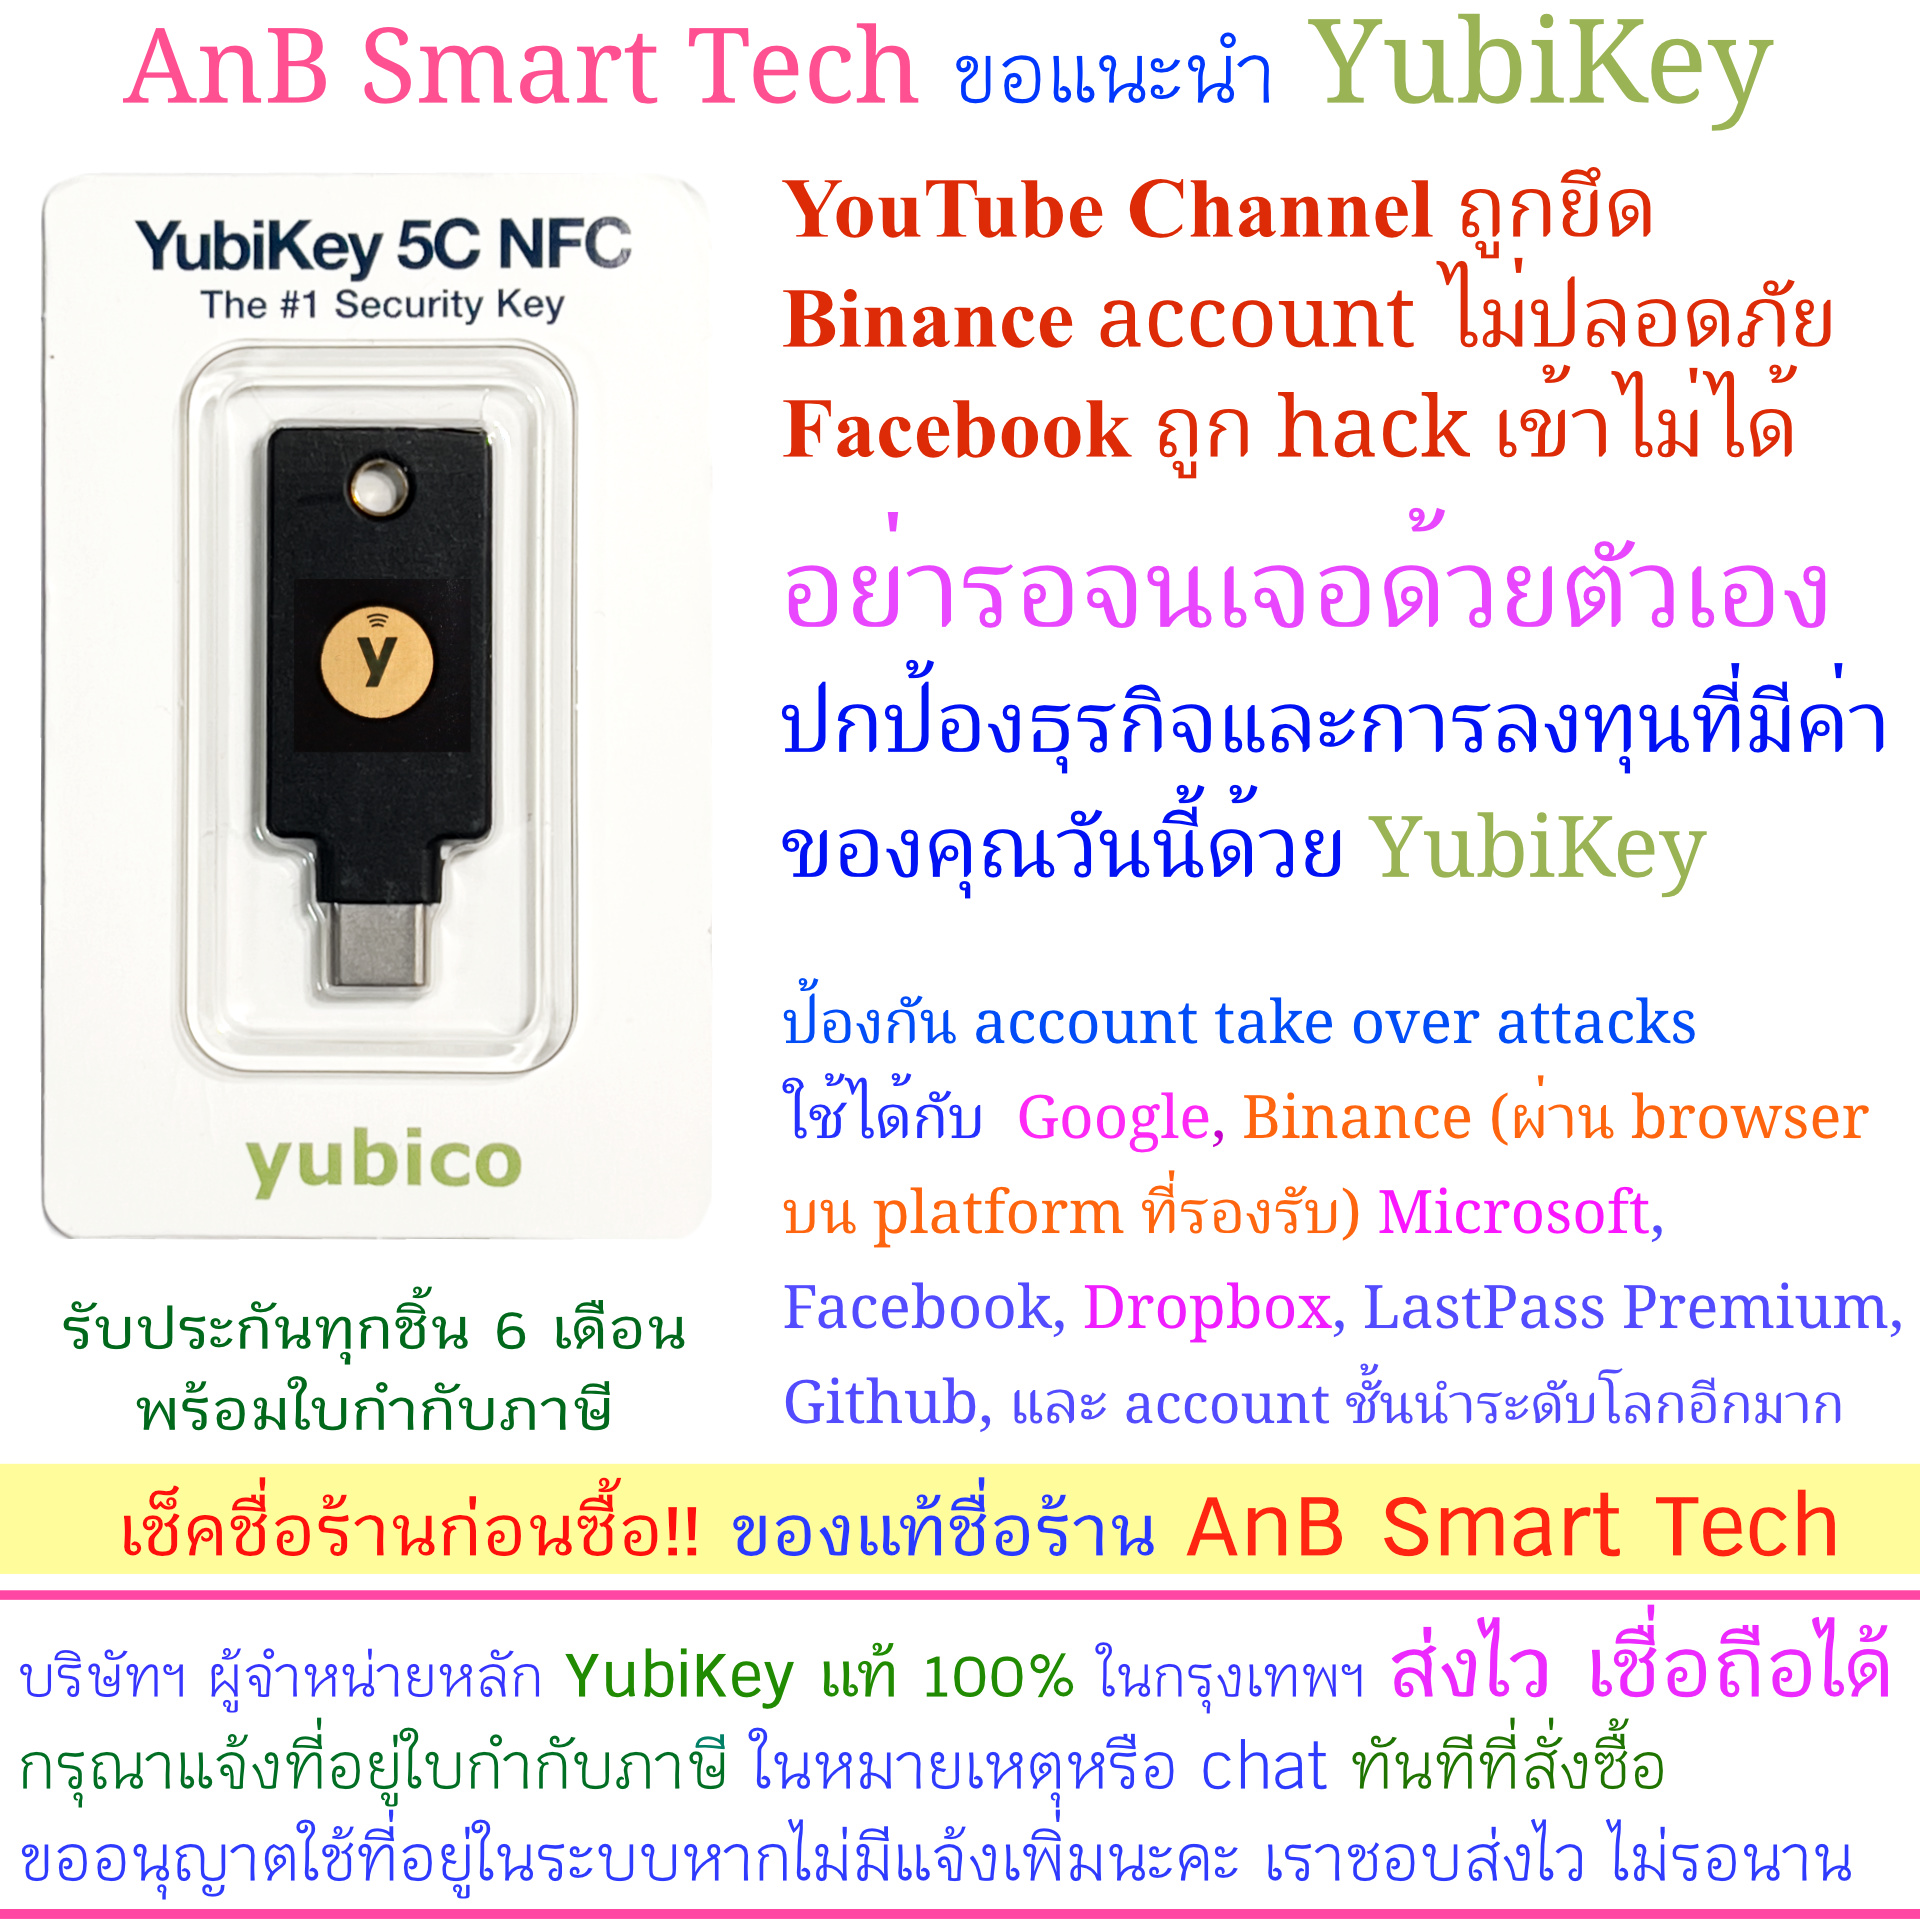 YubiKey 5C NFC (Yubico) ปกป้อง account Binance, Gmail, YouTube, Microsoft, Facebook  (AnB Smart Tech) FIDO2 U2